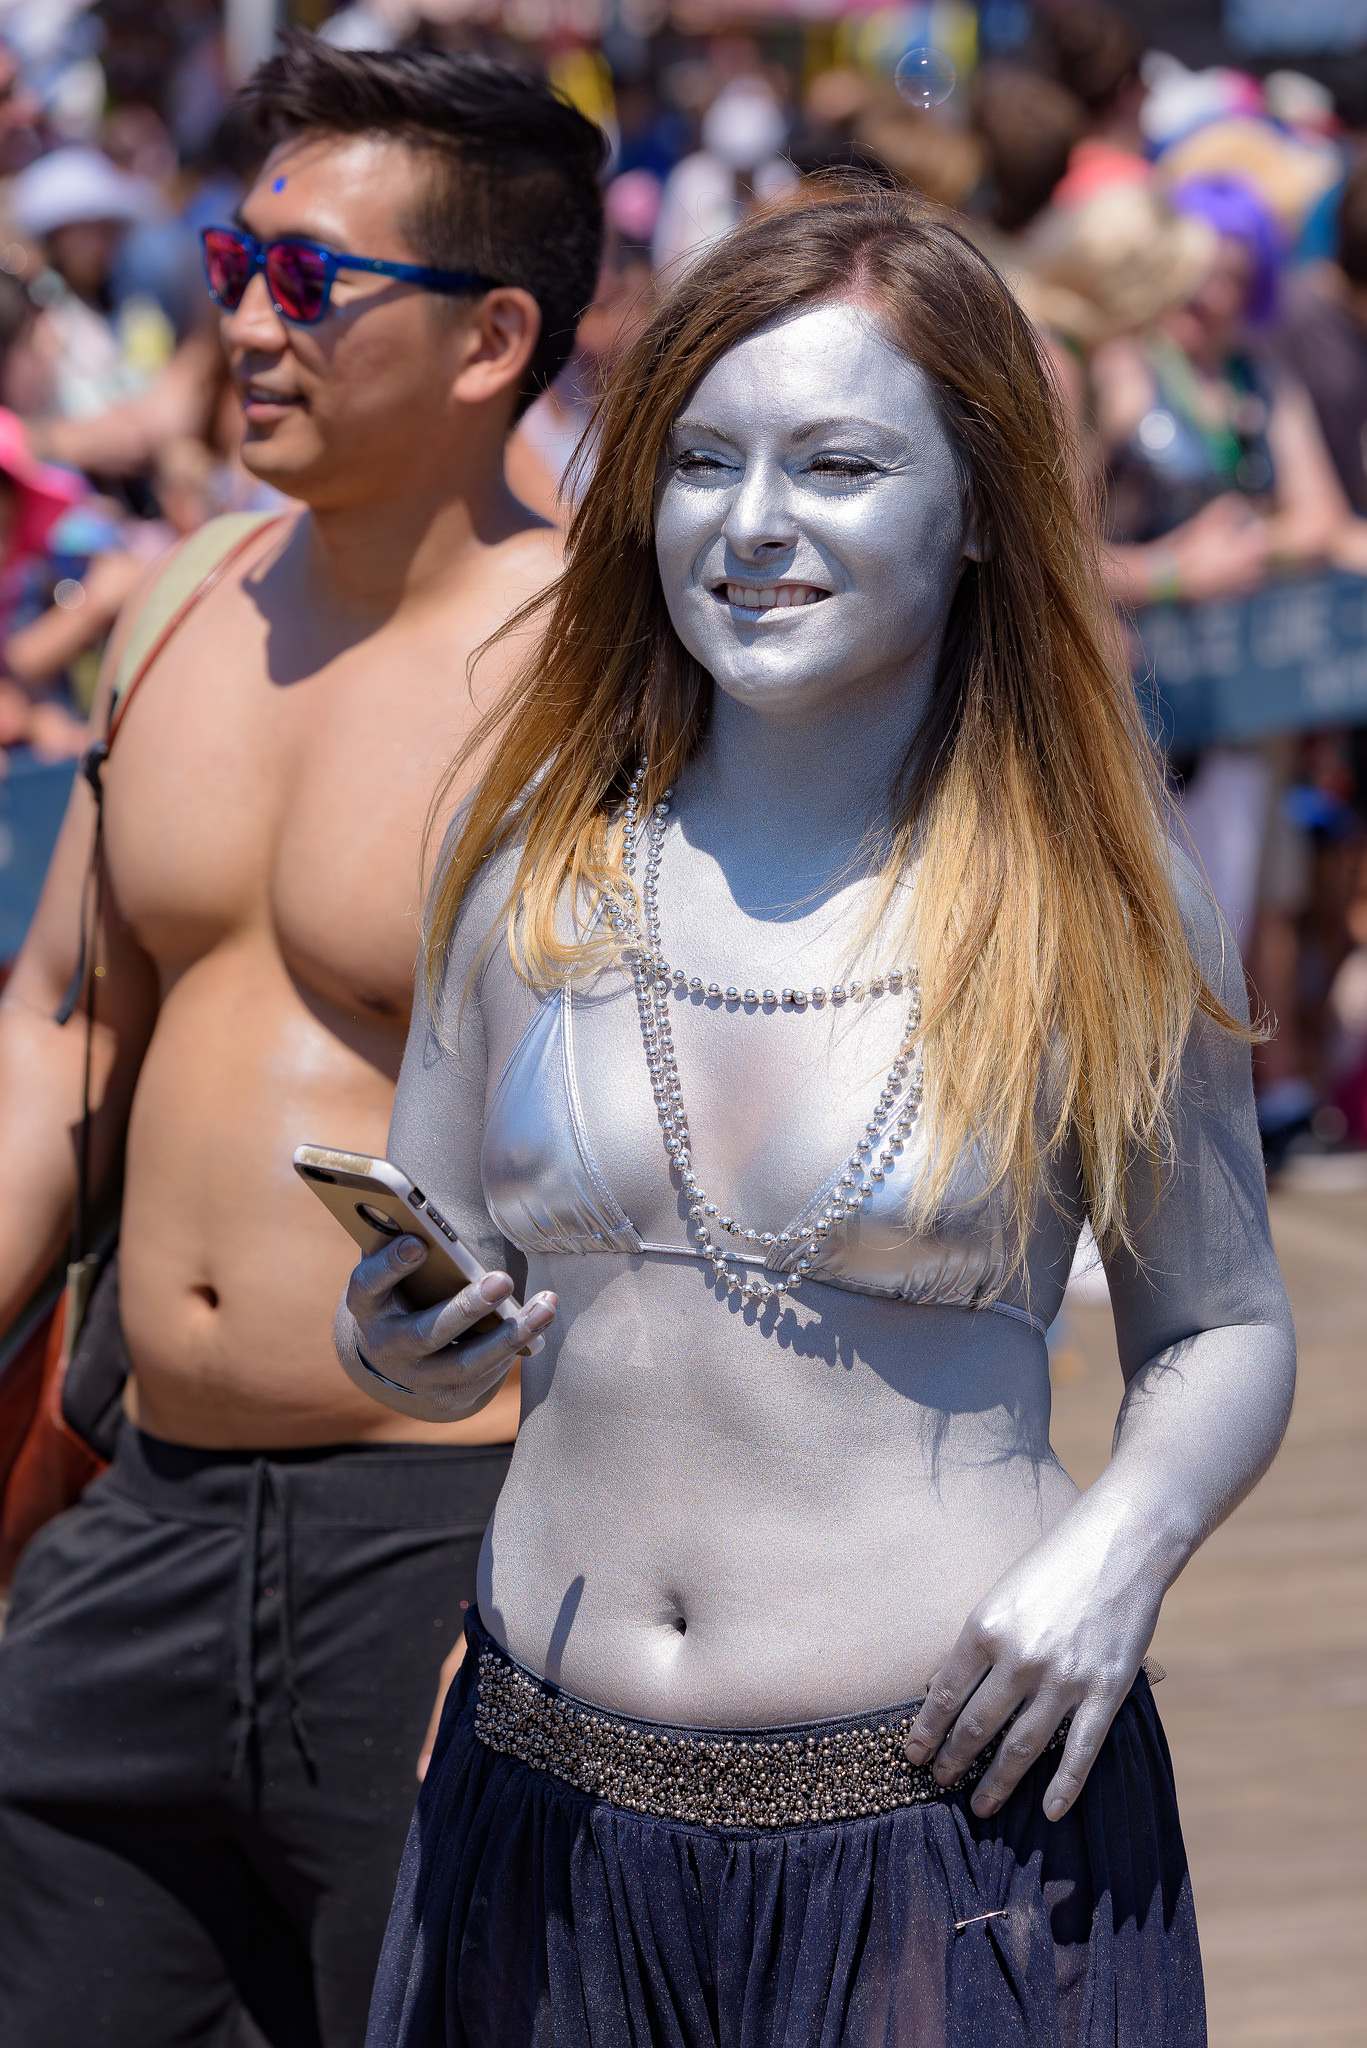 mermaid parade8 2016 Coney Island Mermaid Parade in NYC